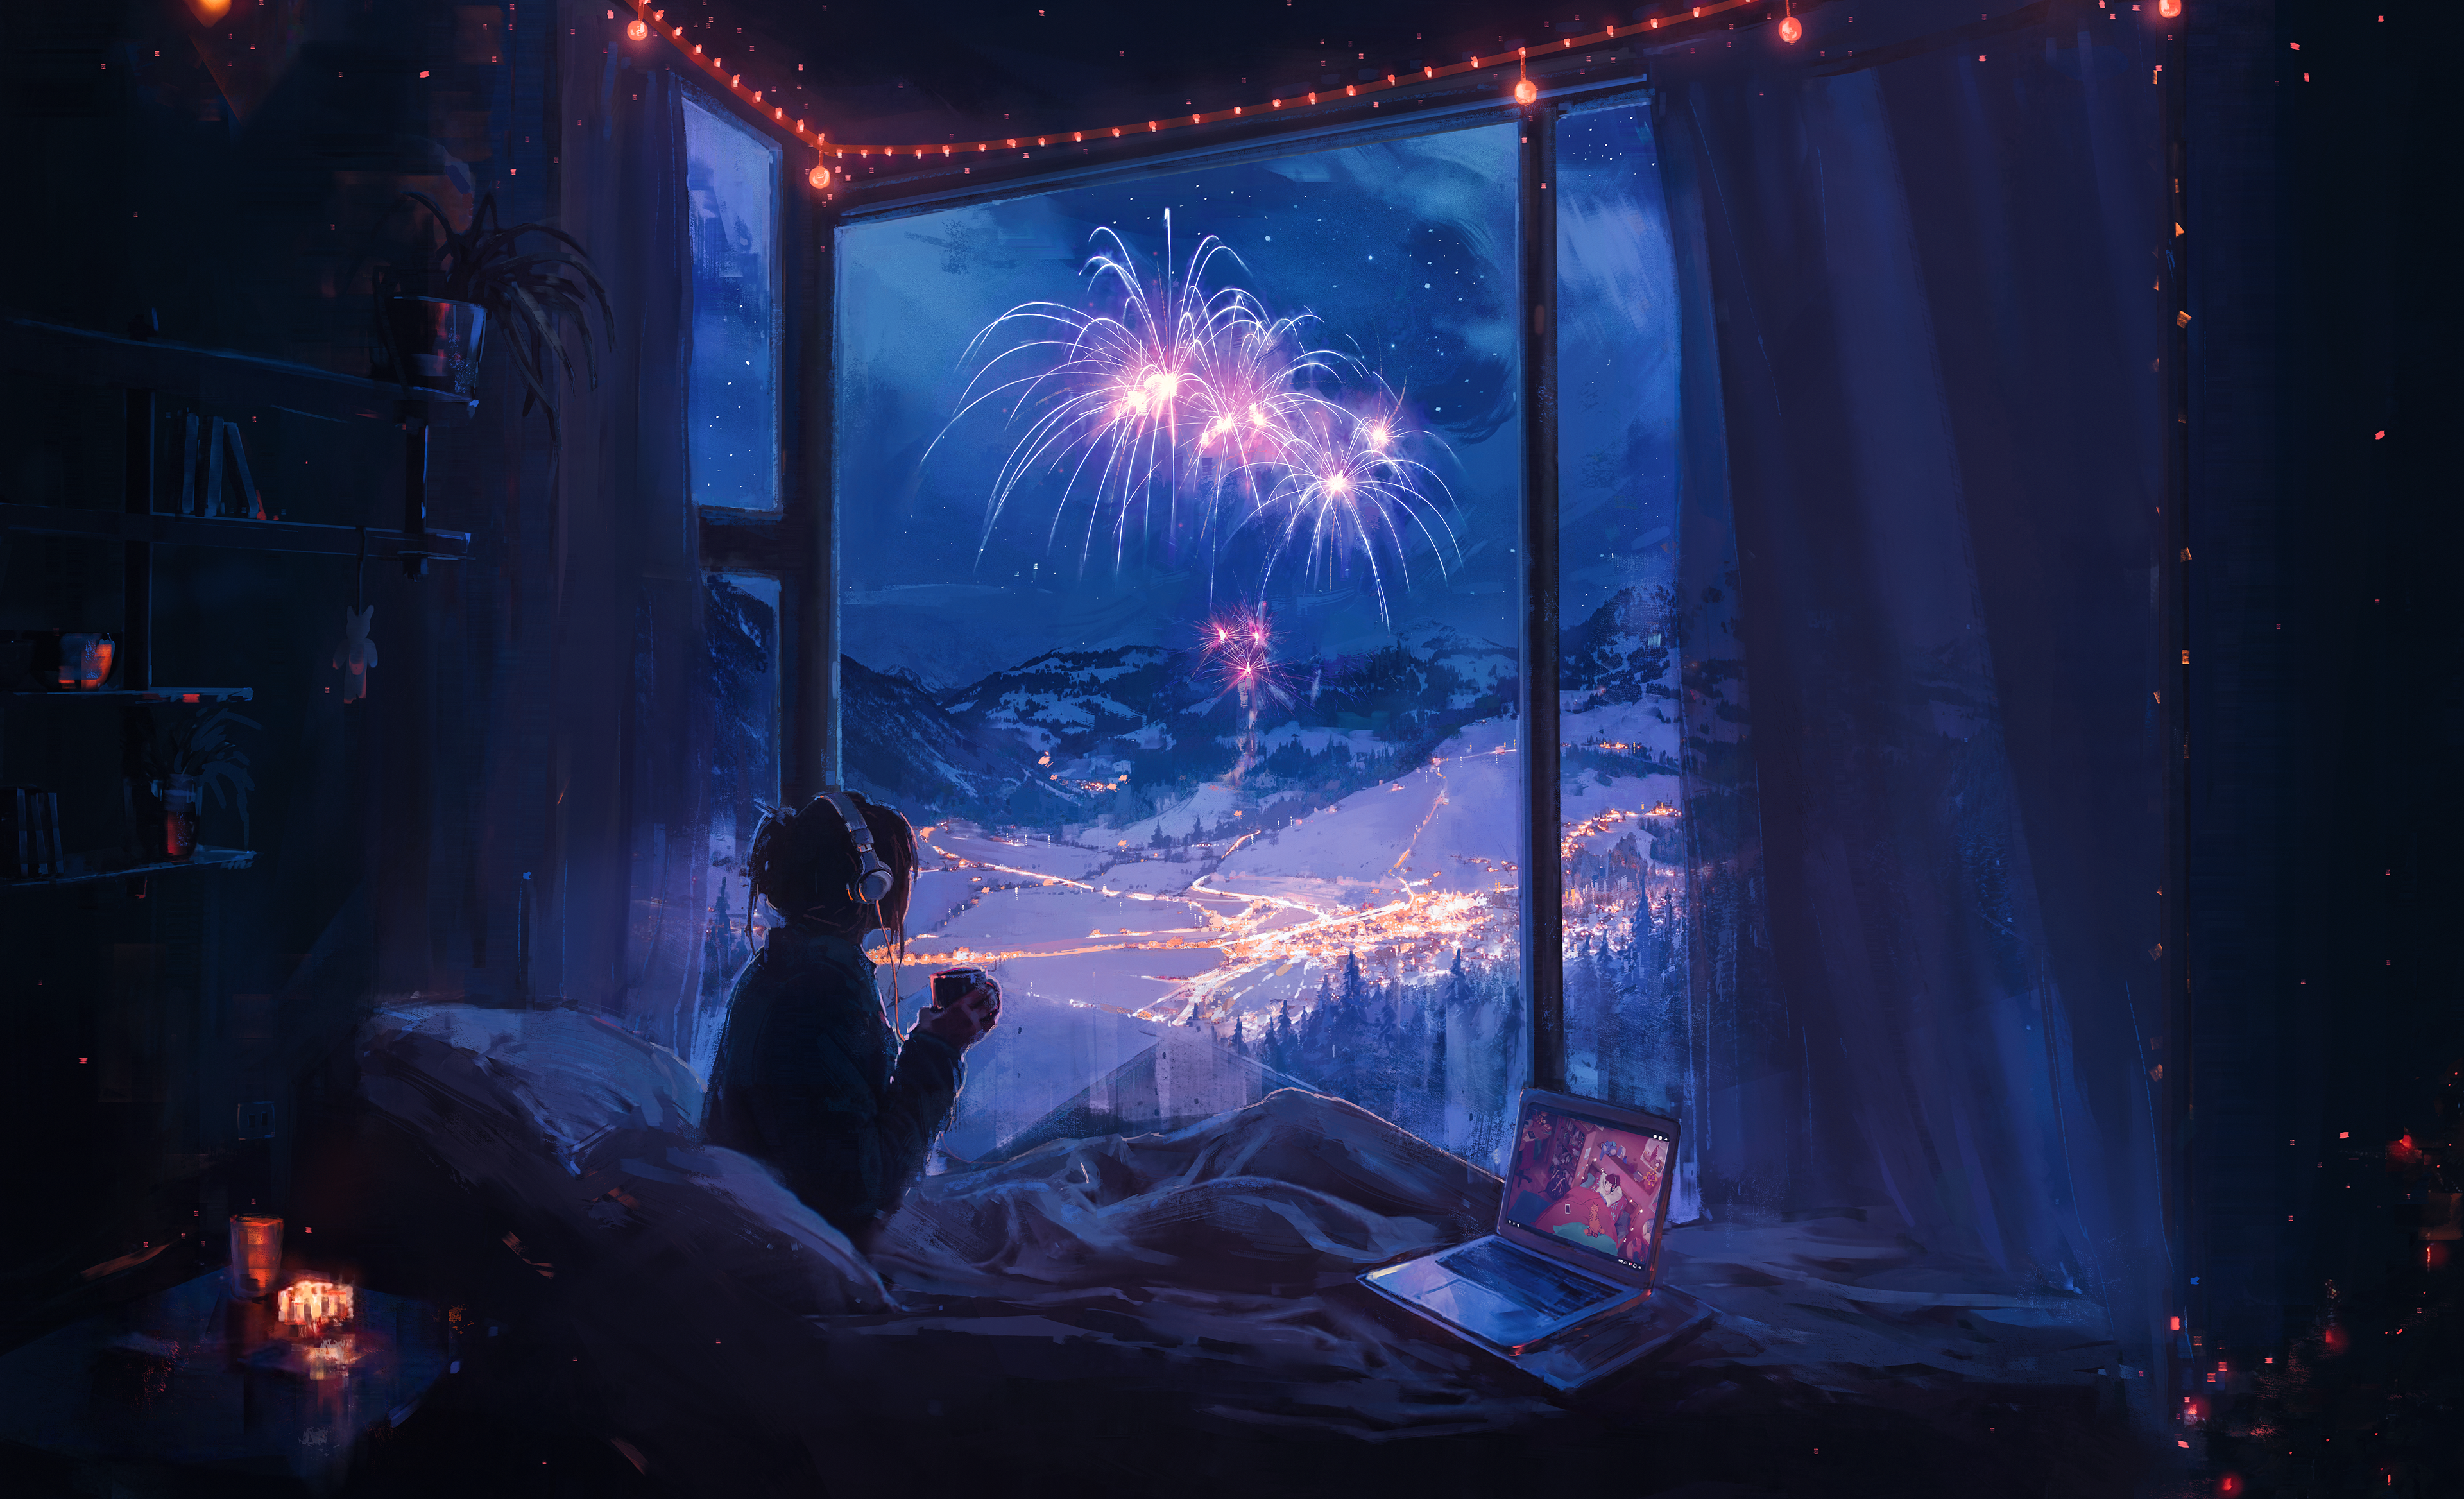 General 3840x2336 digital art artwork illustration painting room indoors window fireworks stars mountains laptop 4K sky clouds city lights headphones